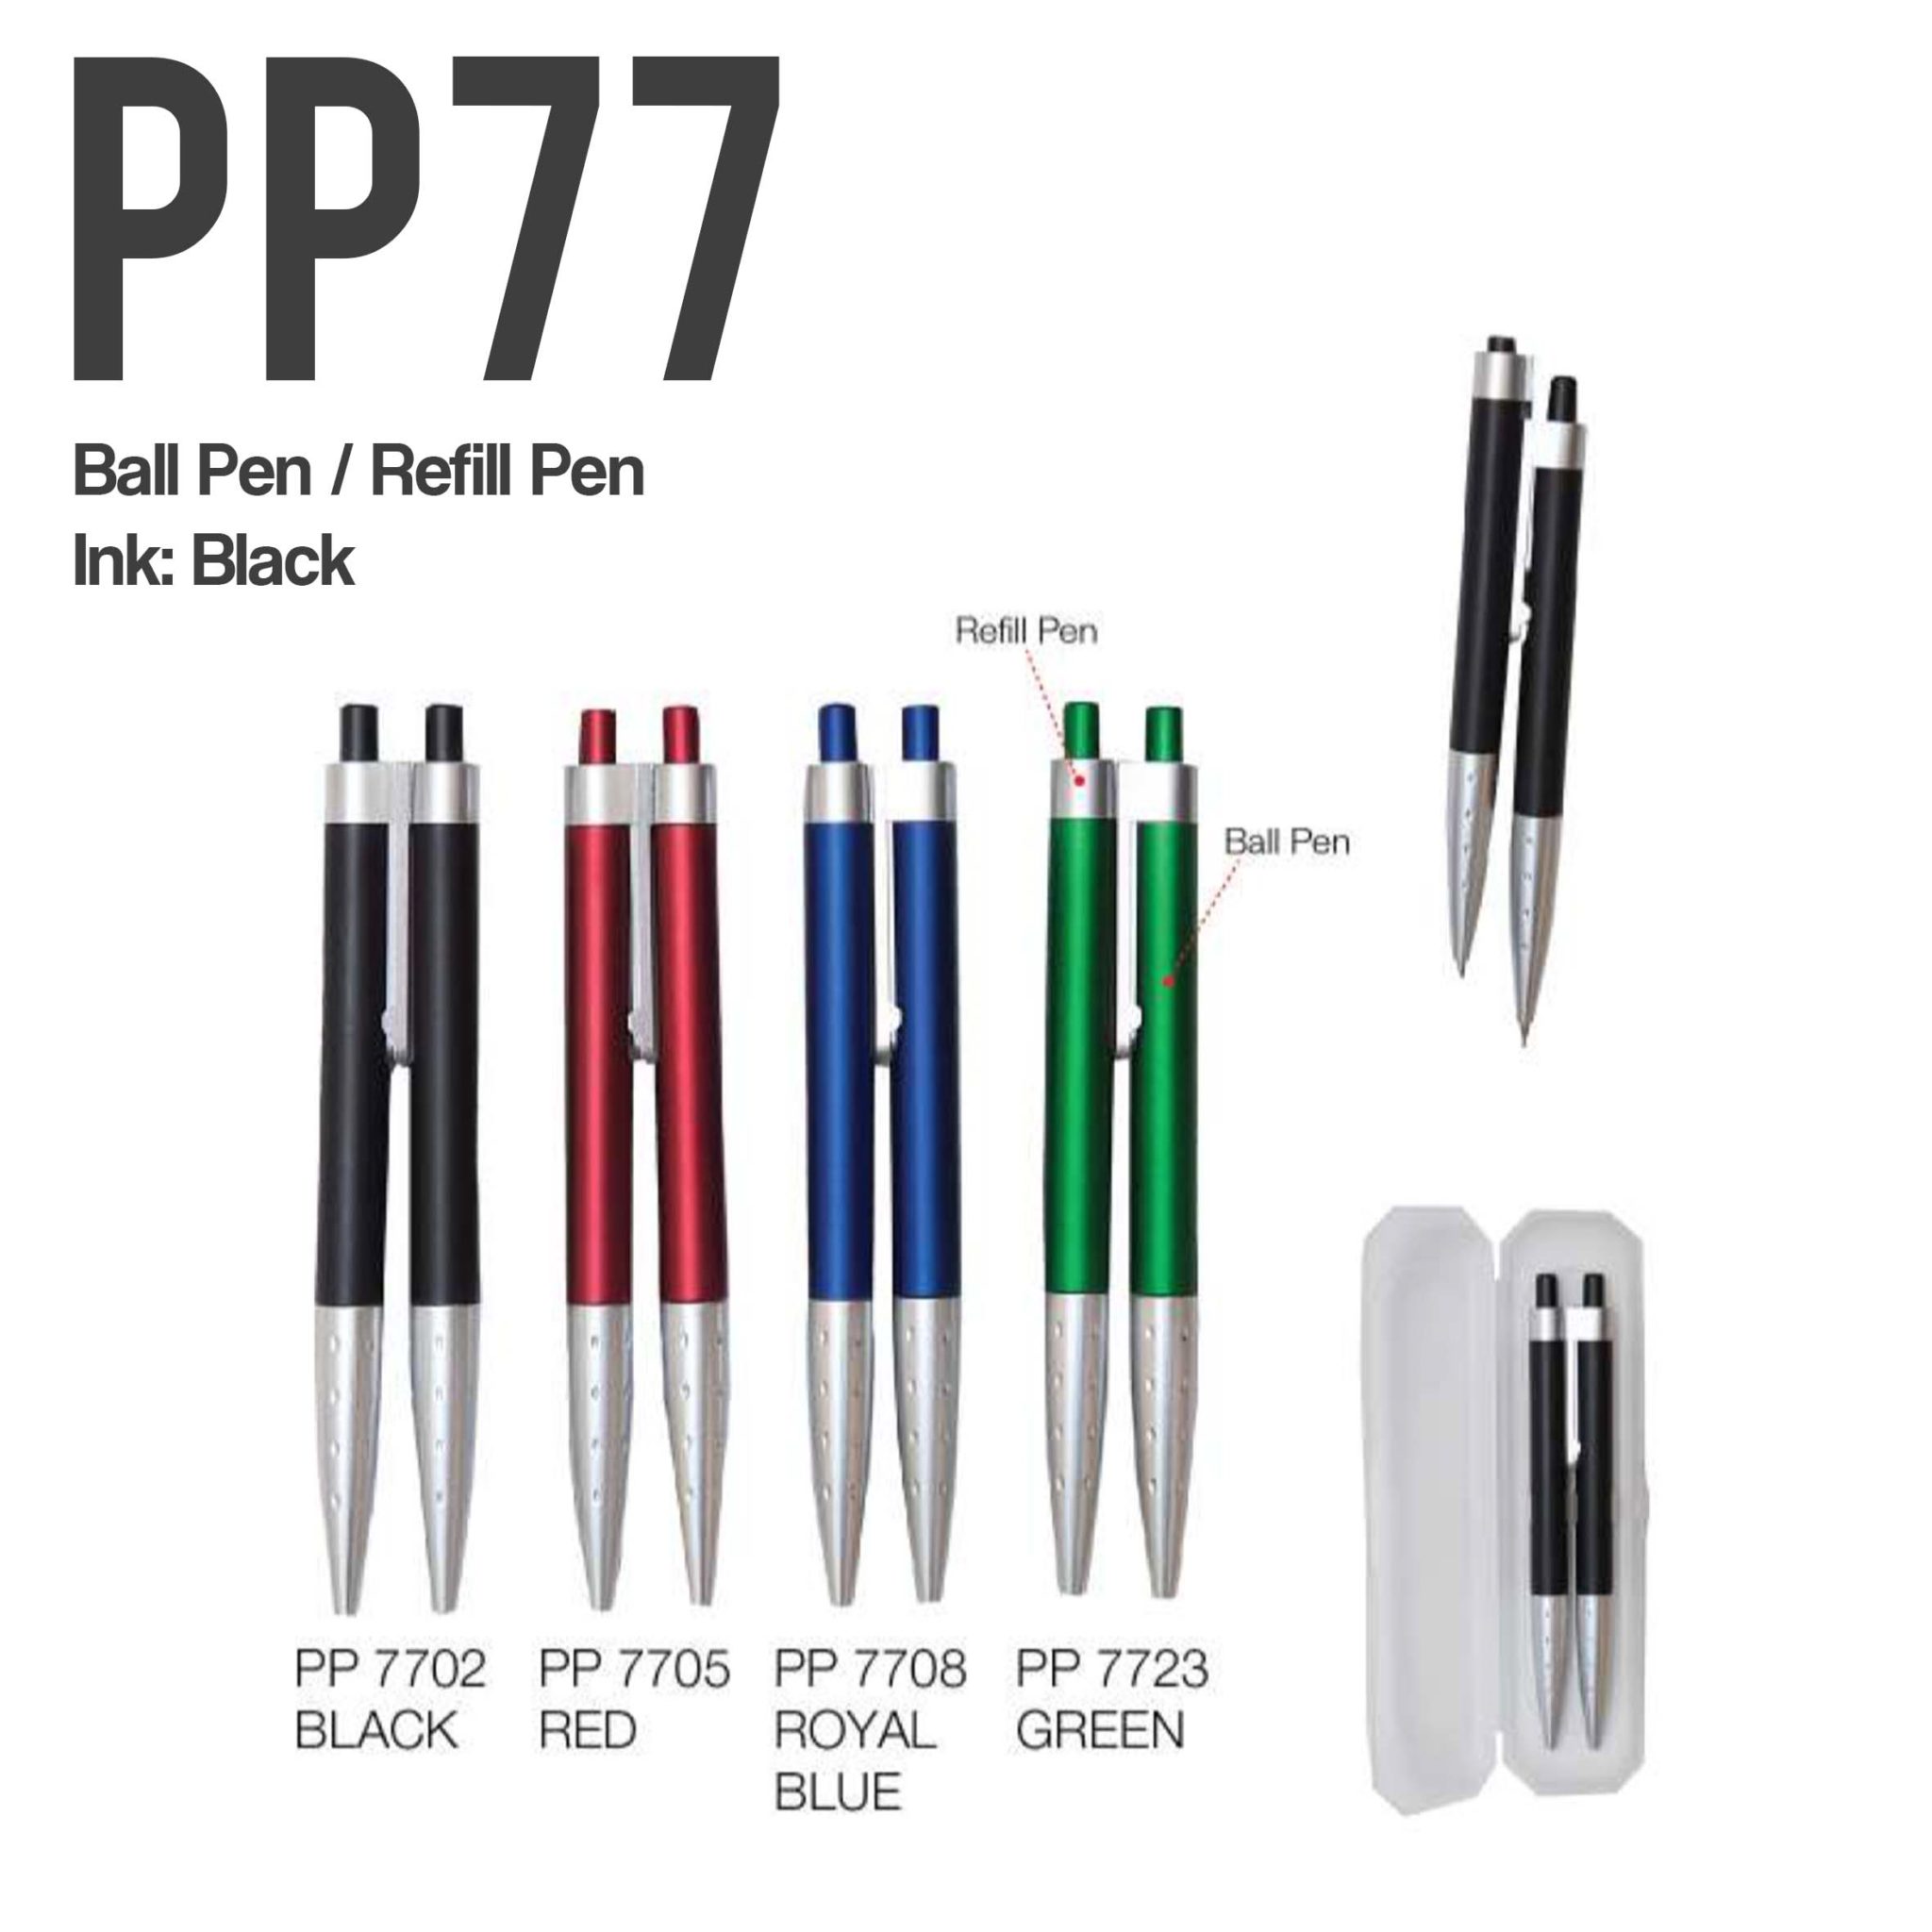 PP77 plastic refill pen scaled